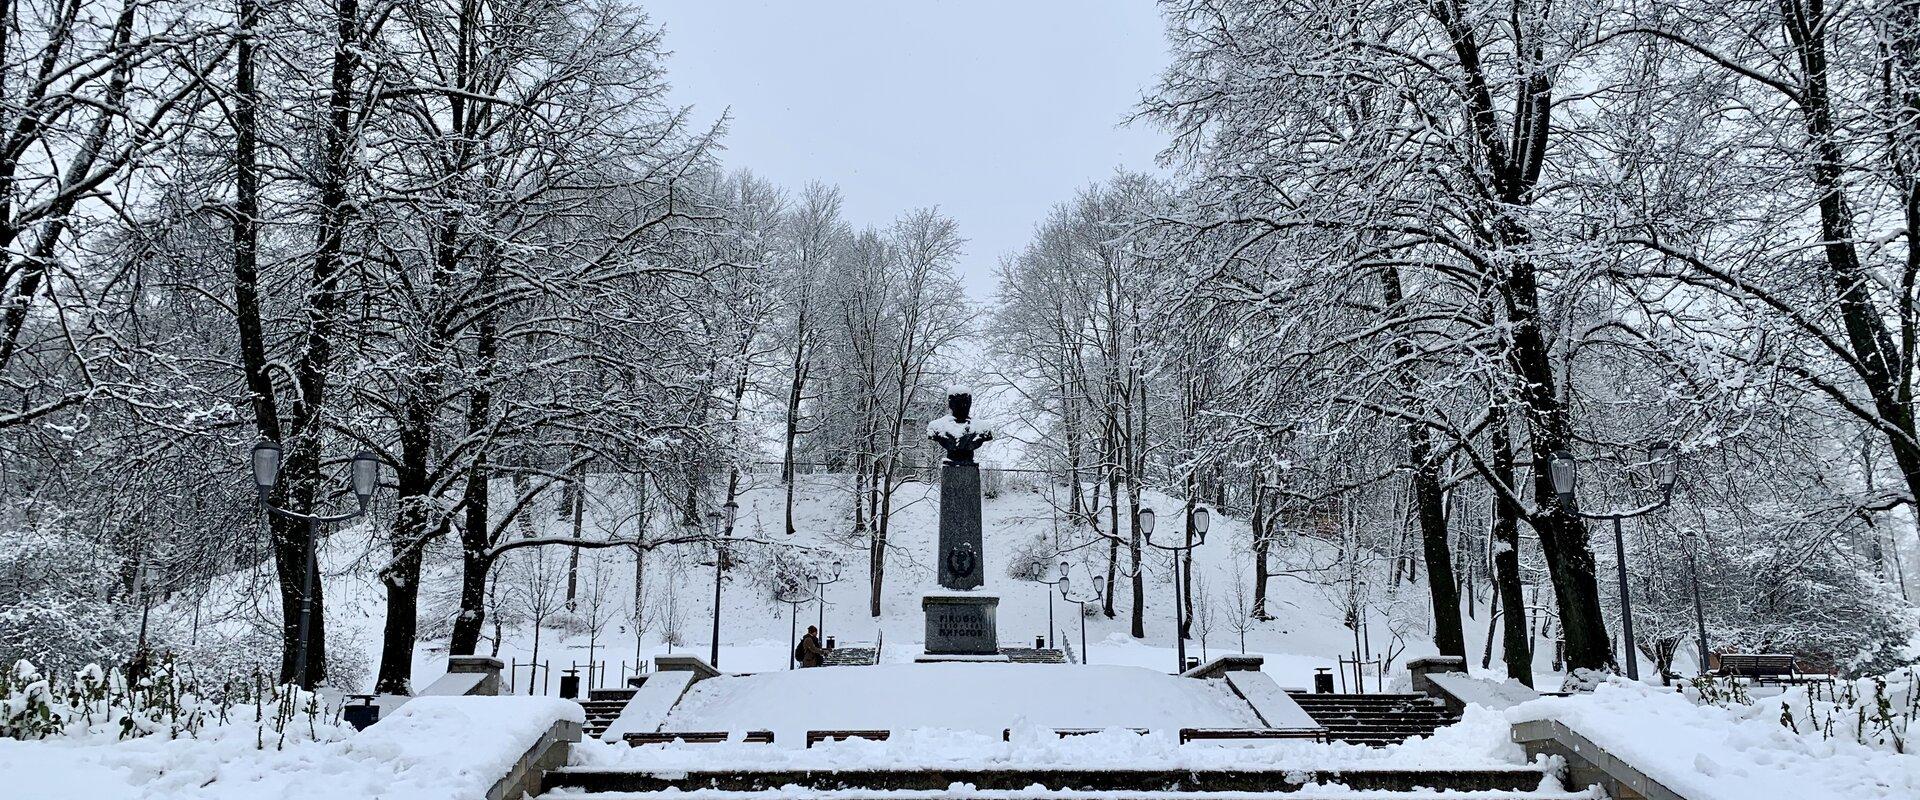 Snowy Pirogov Park and stairs